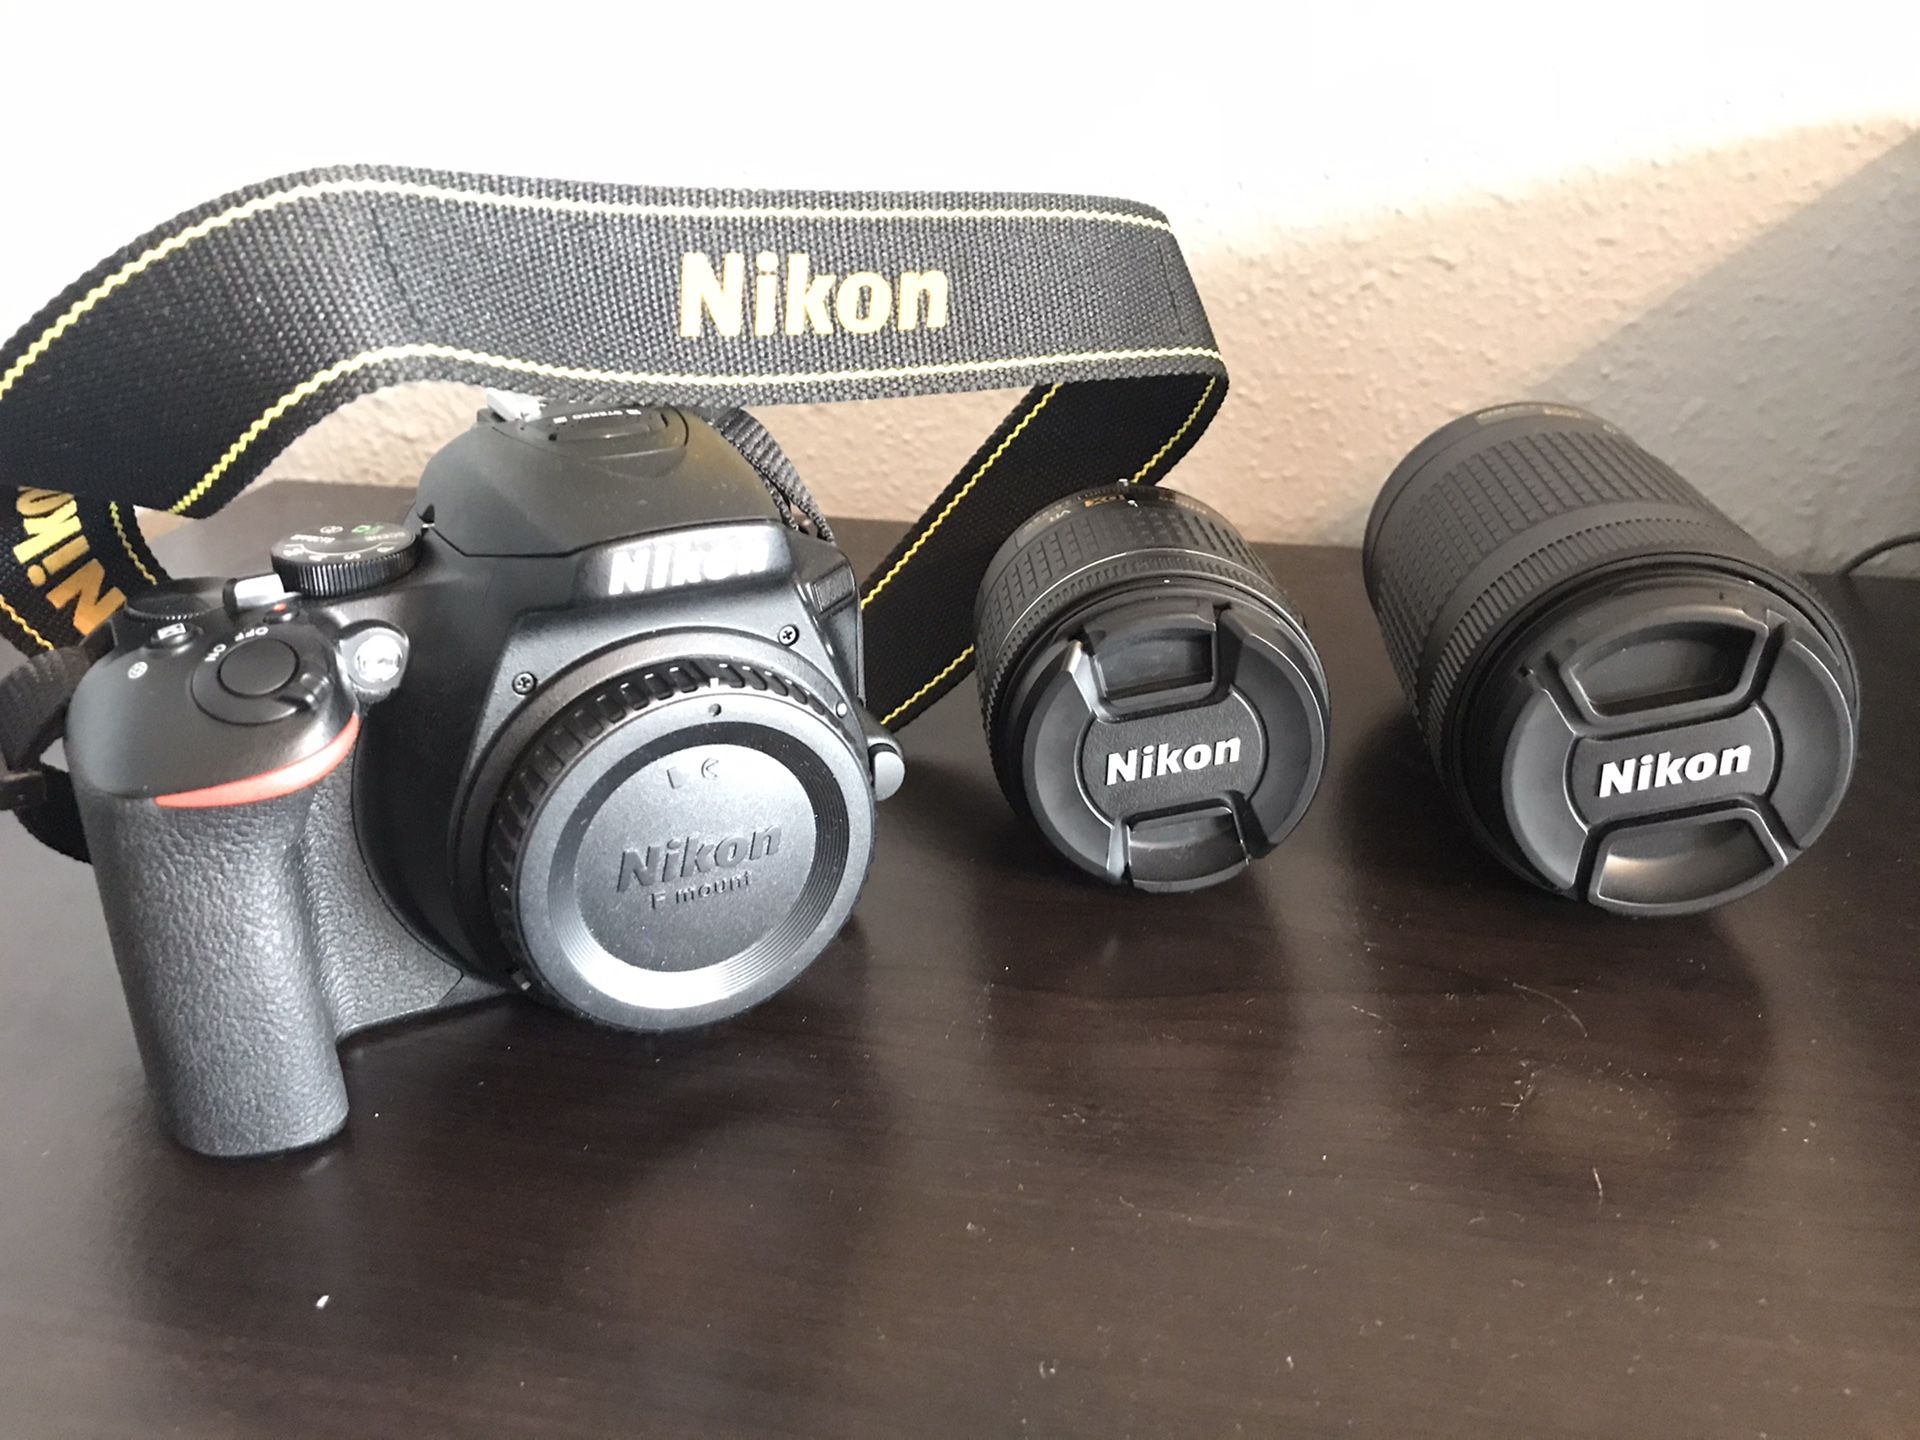 Nikon D5600 2 NIKKOR lenses, 2 rechargeable batteries, 128GB SD card